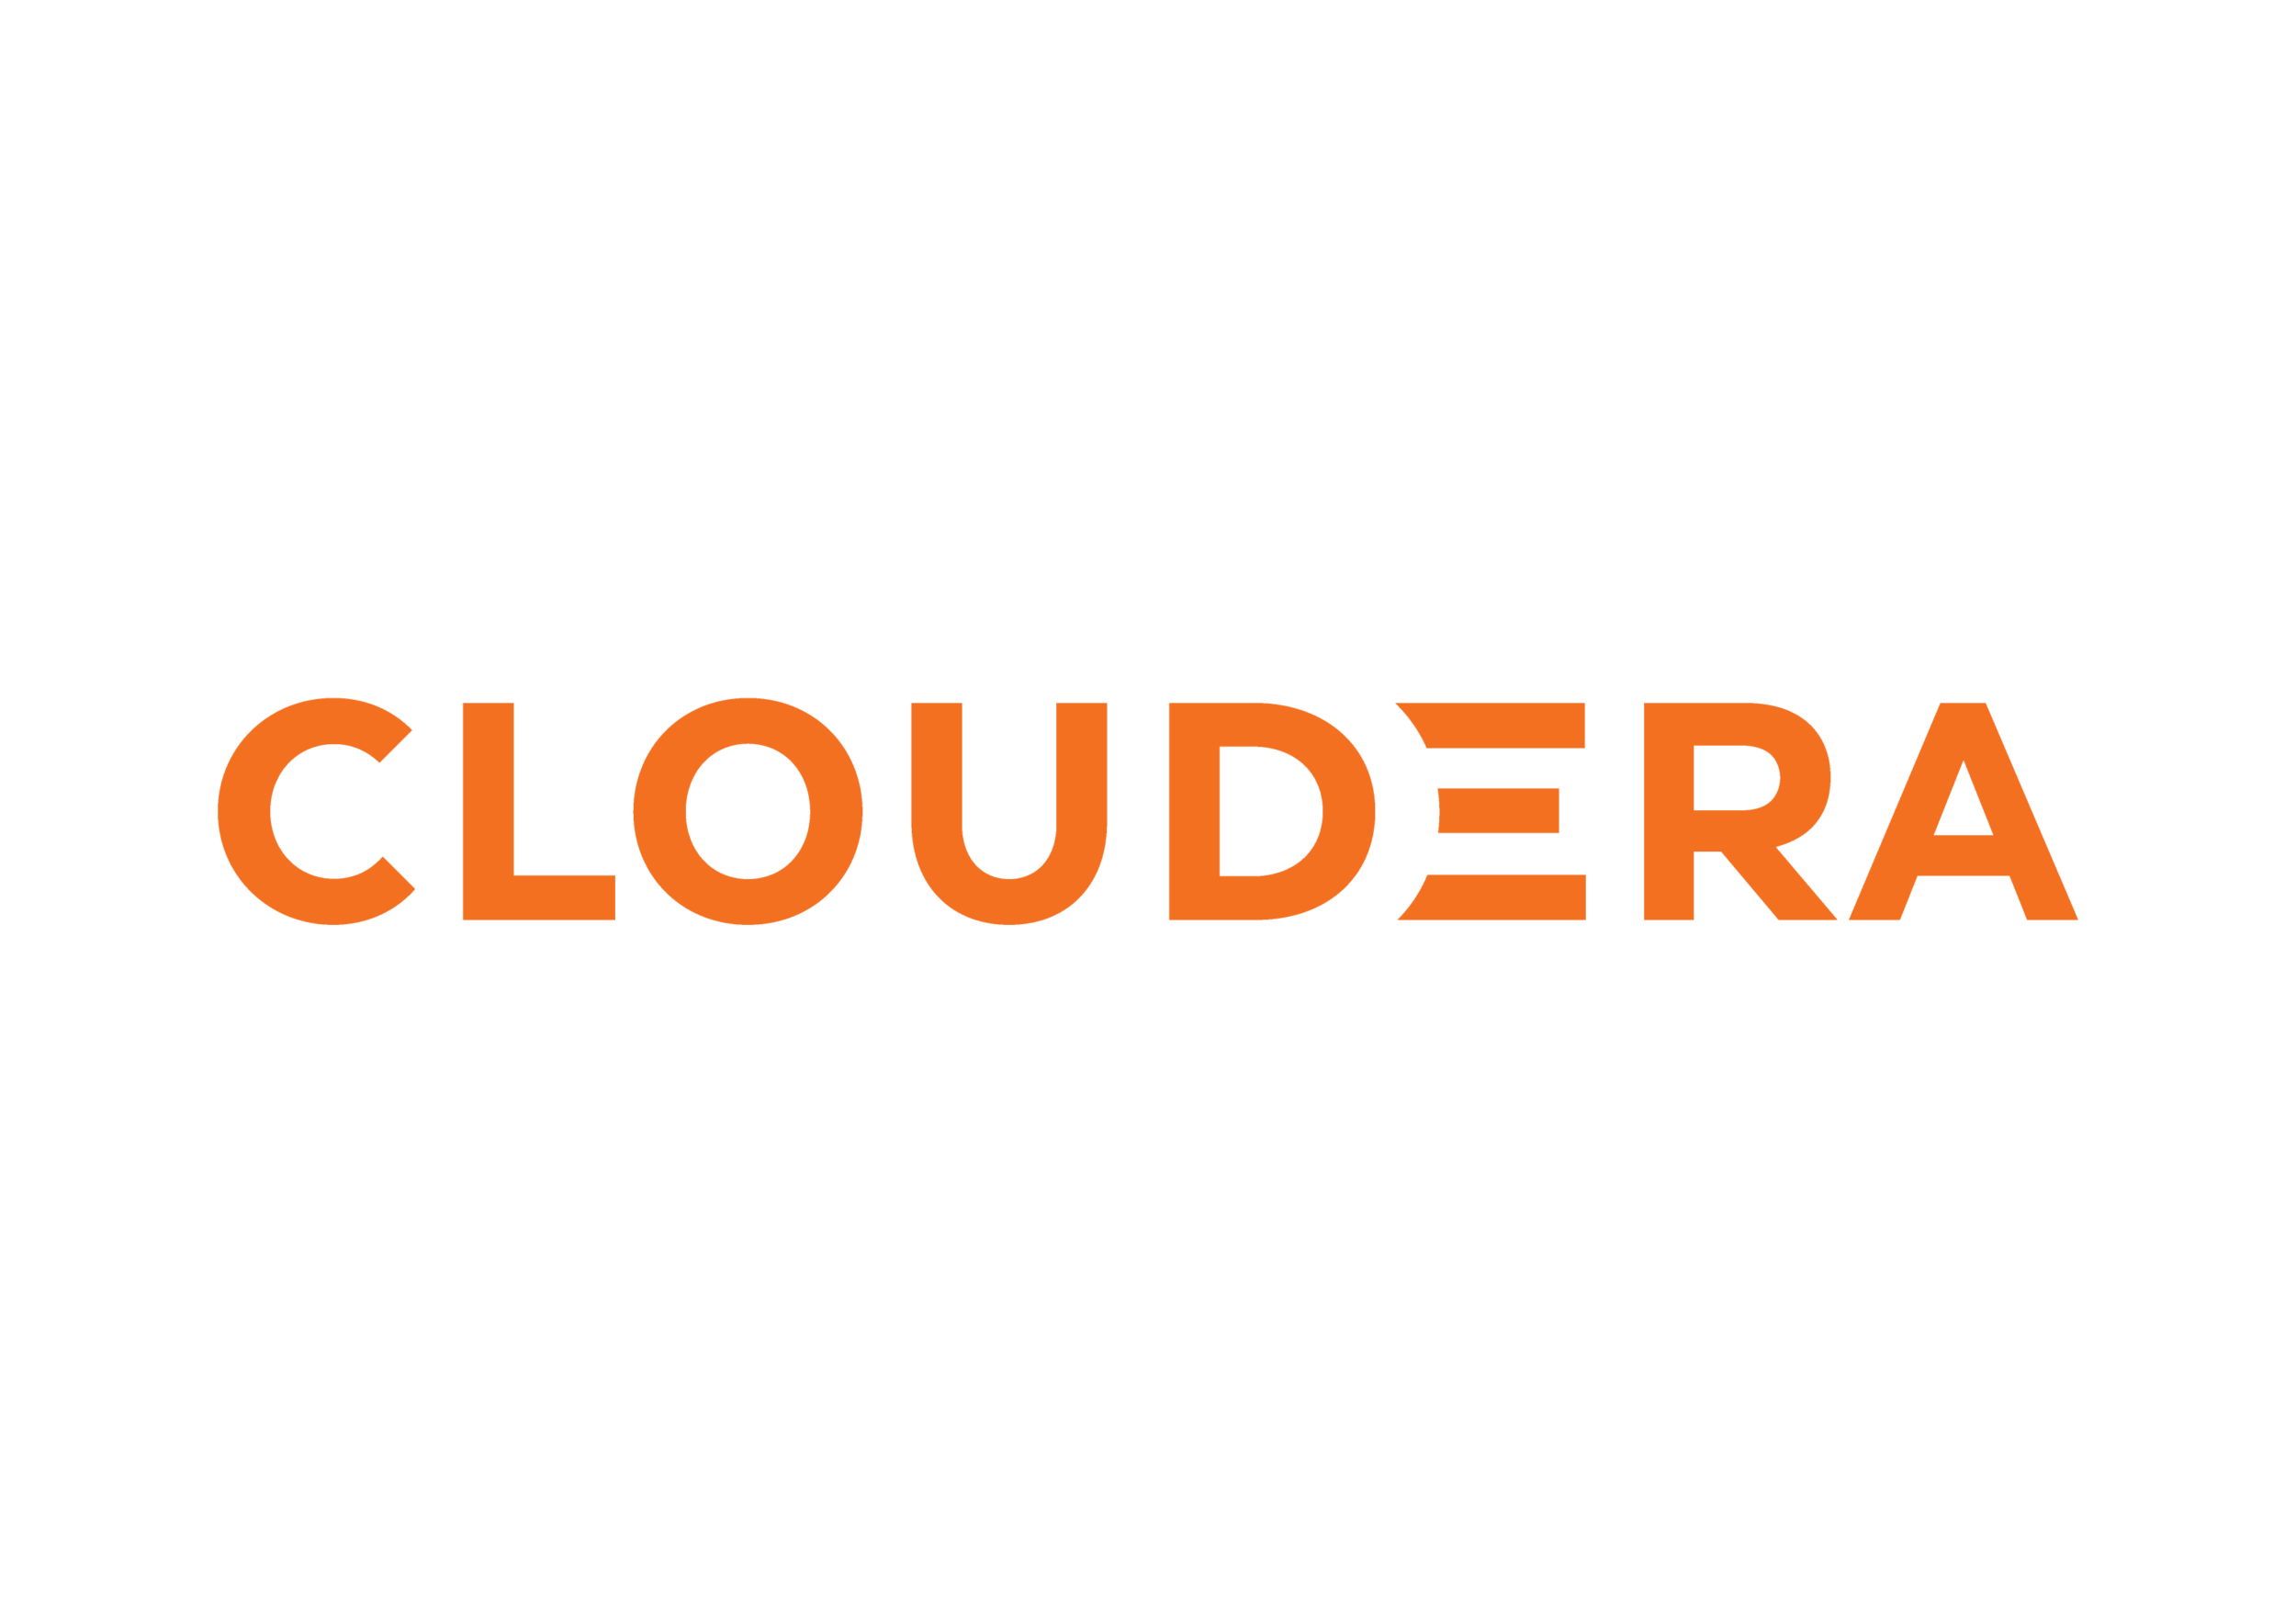 Cloudera the hybrid data company